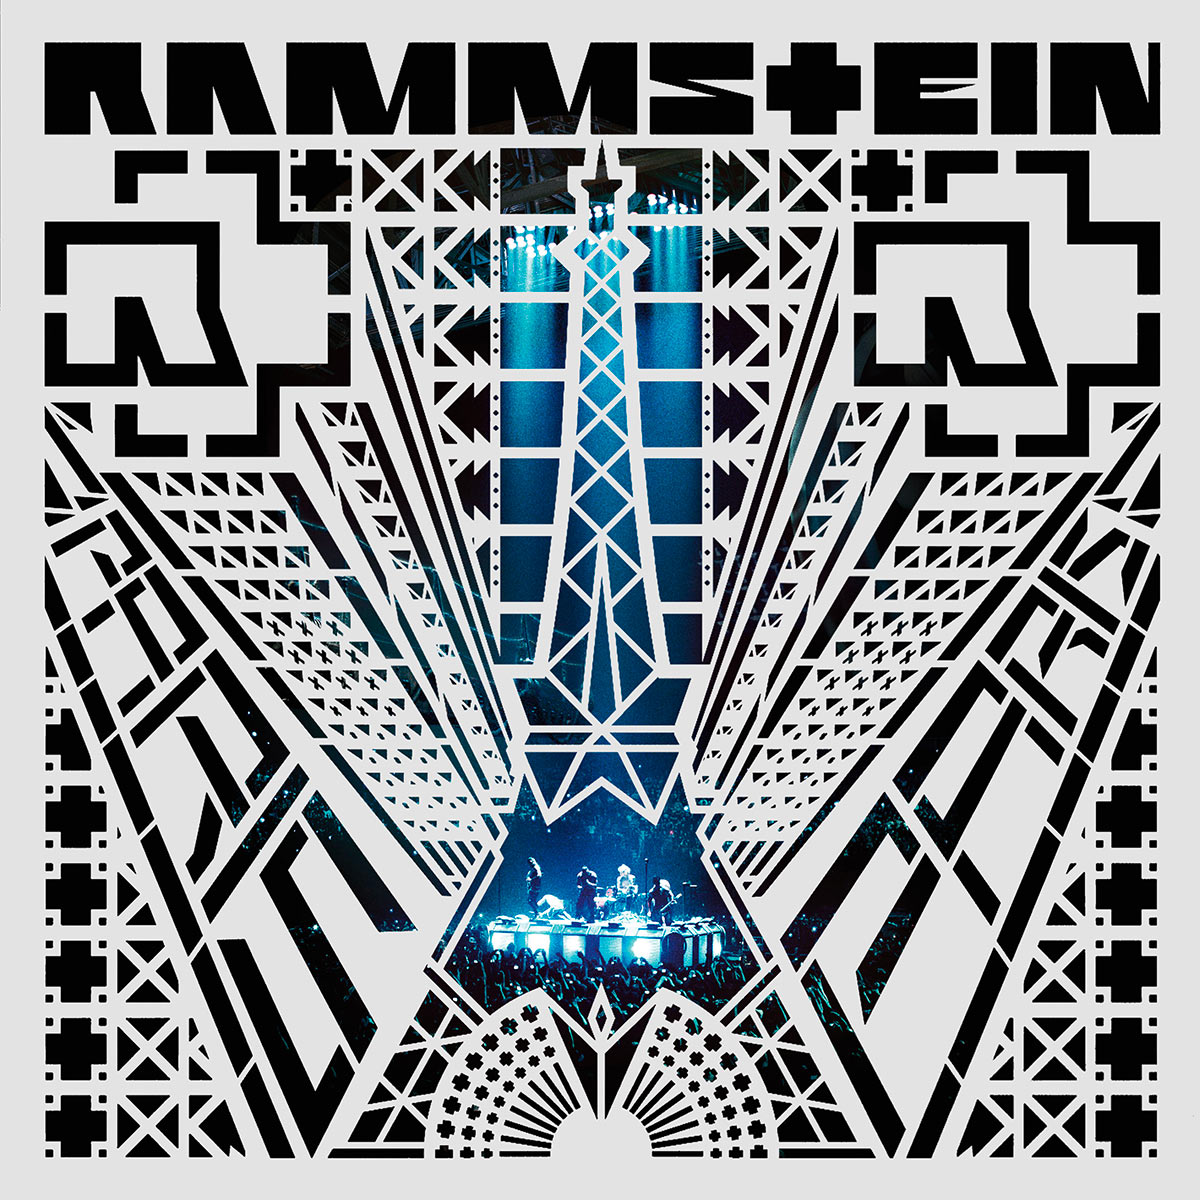 Paris 2012- Rammstein - eMaginarock